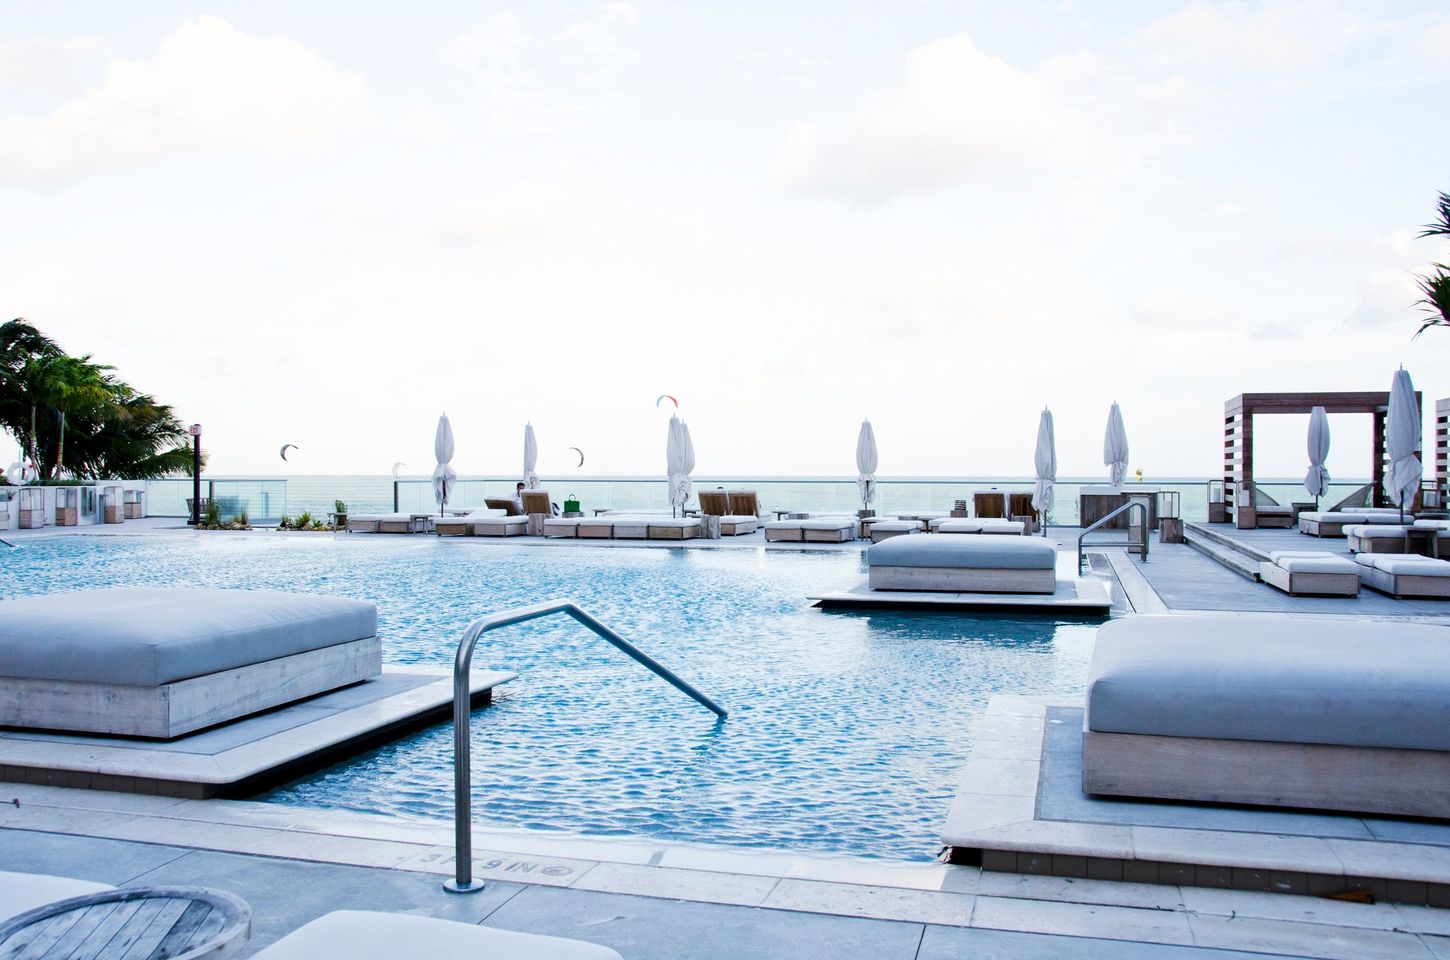 xls realty roney palace miami south beach florida luxury condo rentals